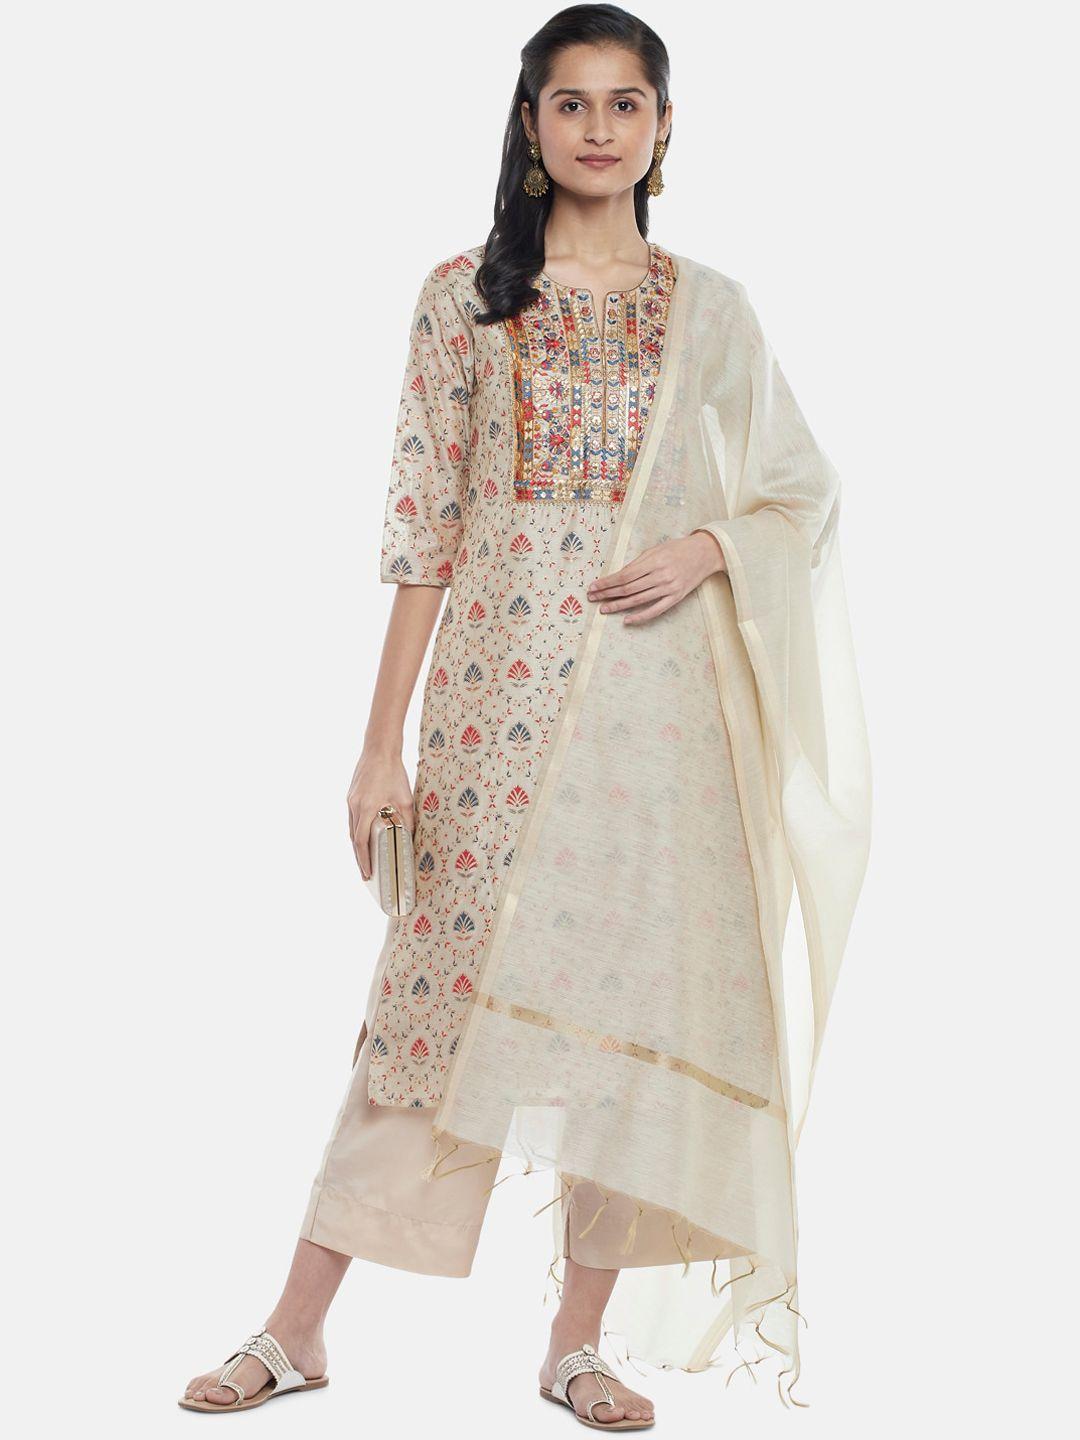 rangmanch-by-pantaloons-women-beige-floral-printed-thread-work-chanderi-cotton-kurta-set